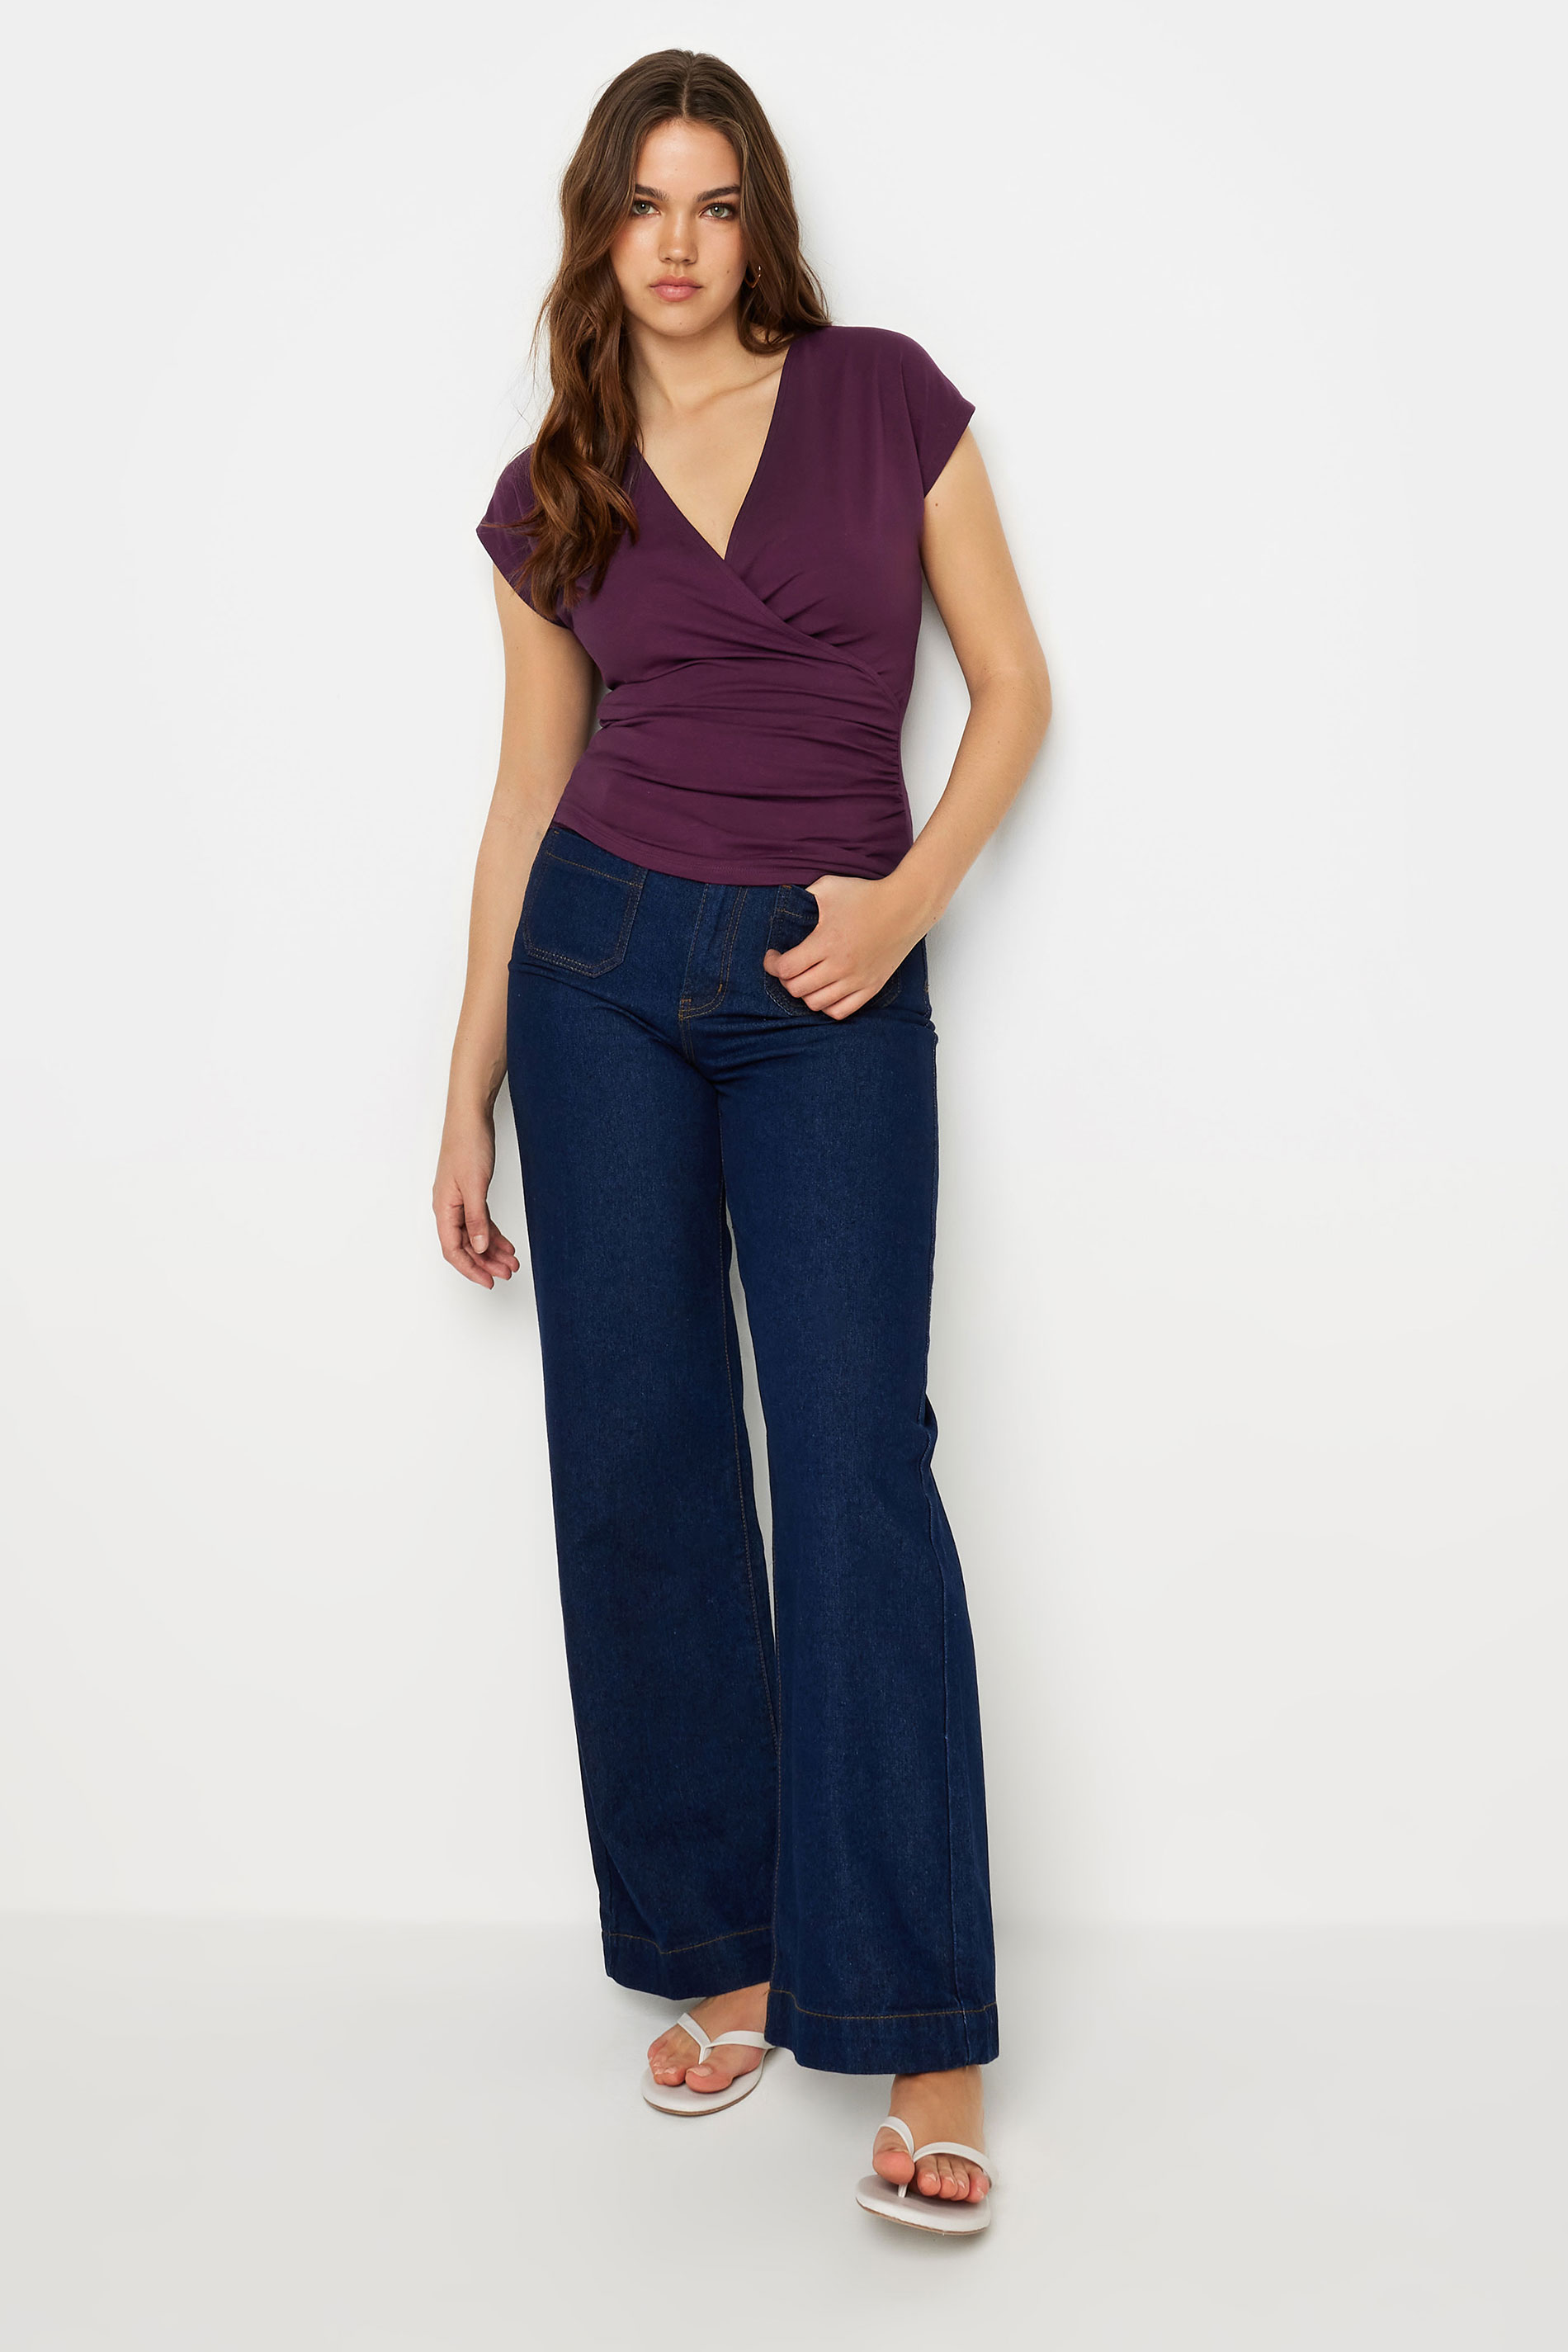 LTS Tall Women's Wine Red Short Sleeve Wrap Top | Long Tall Sally  2